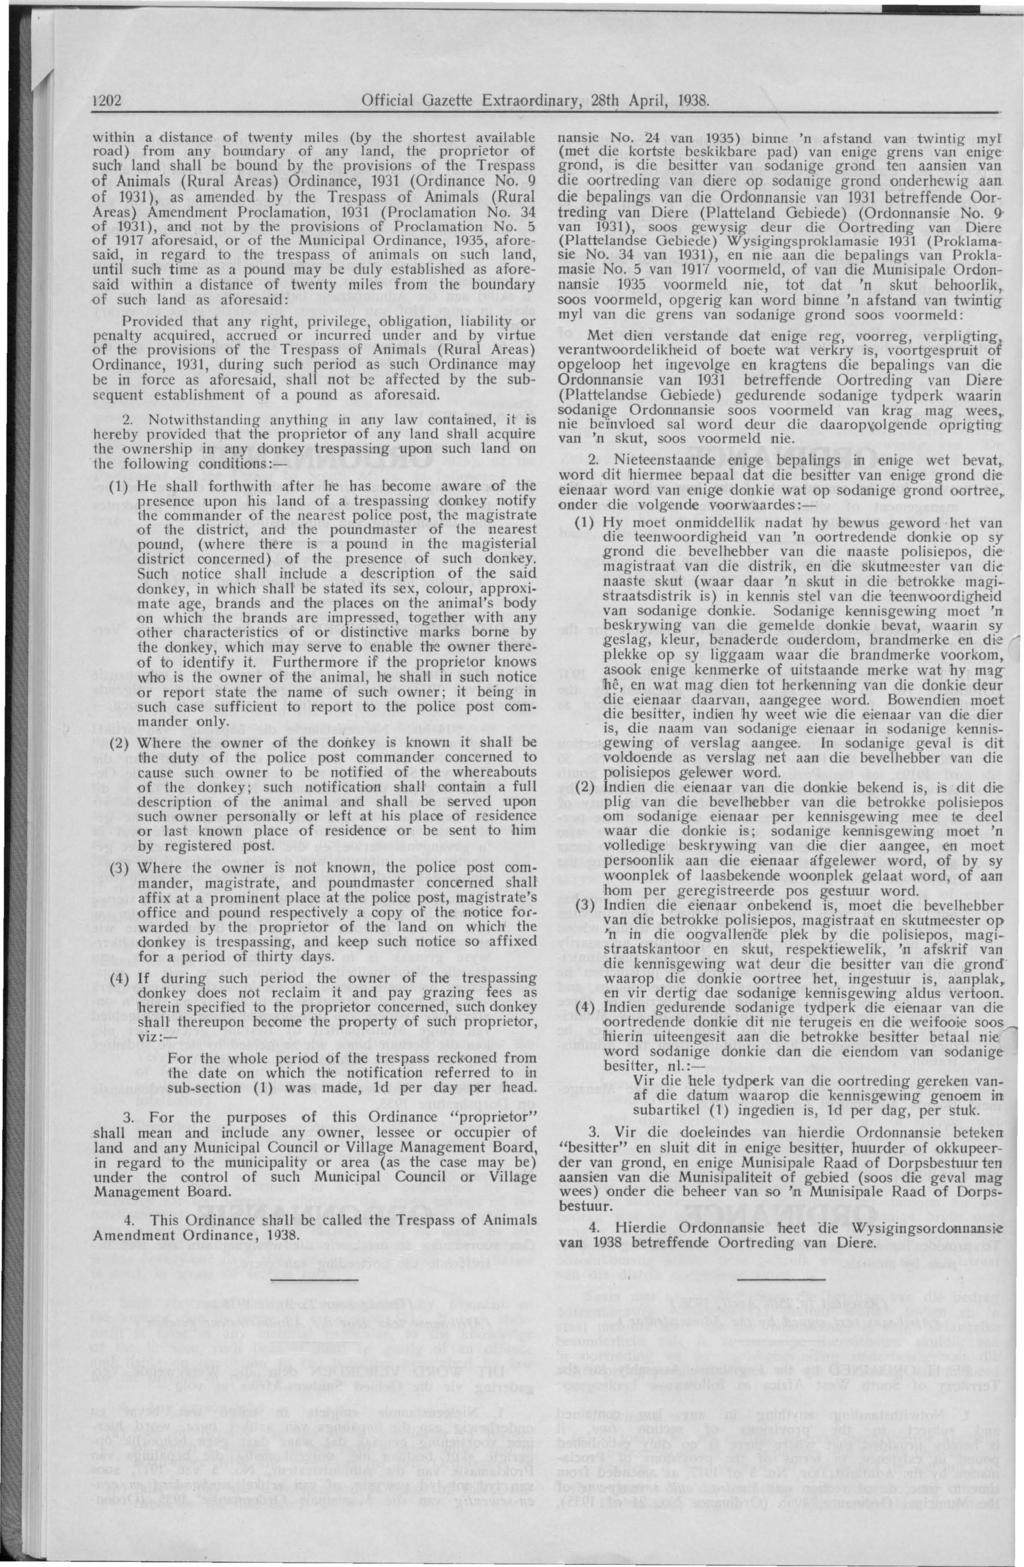 1202 Offidal Gazette Extraordinary, 28th April, 1938.